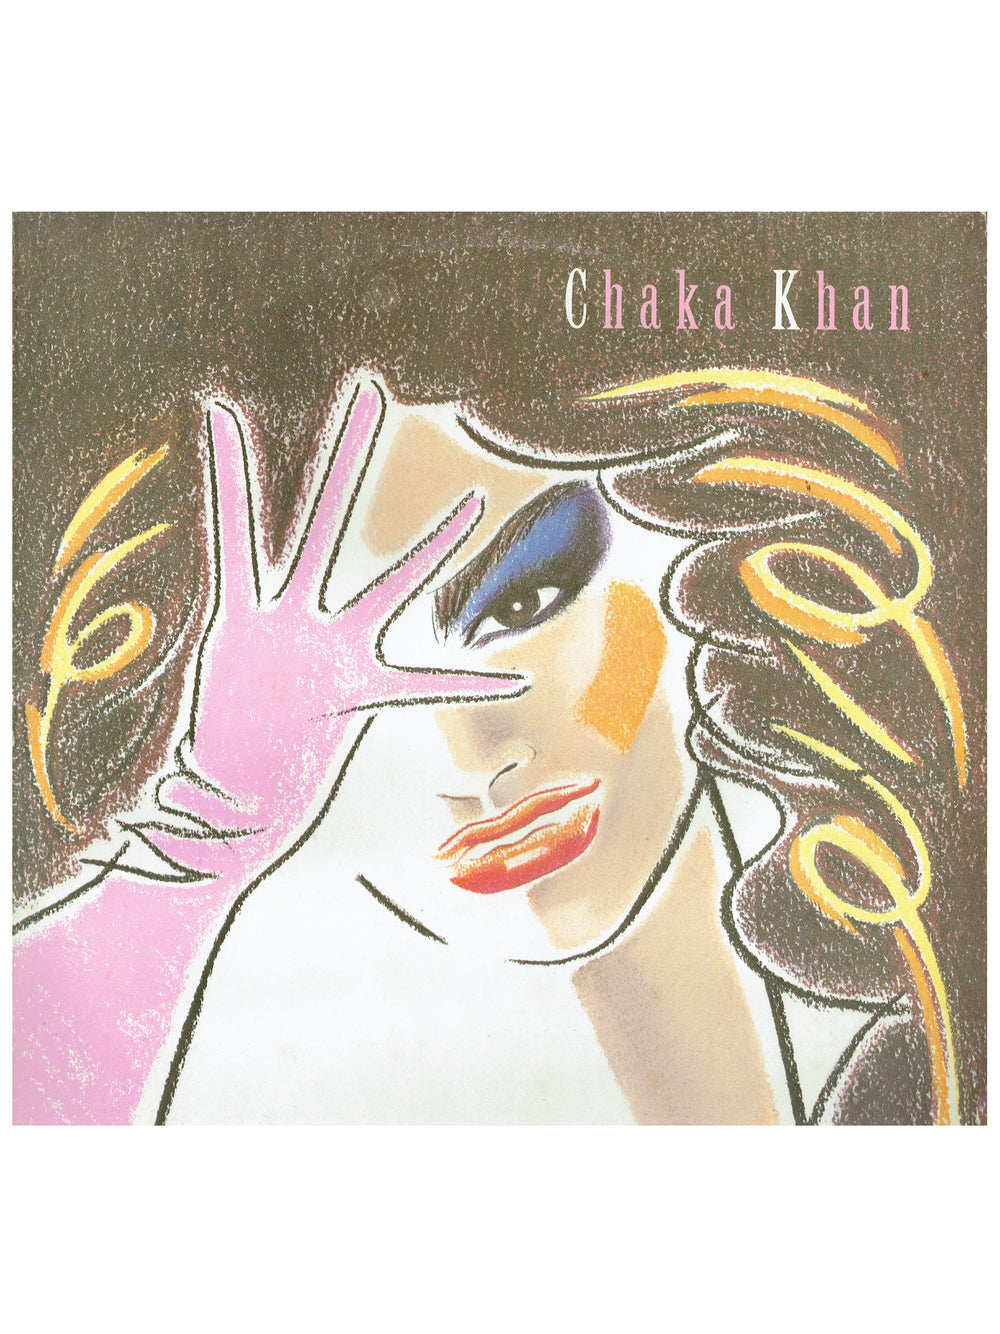 Prince – Chaka Khan I Feel For You Vinyl Album Spanish 1984 Release Prince